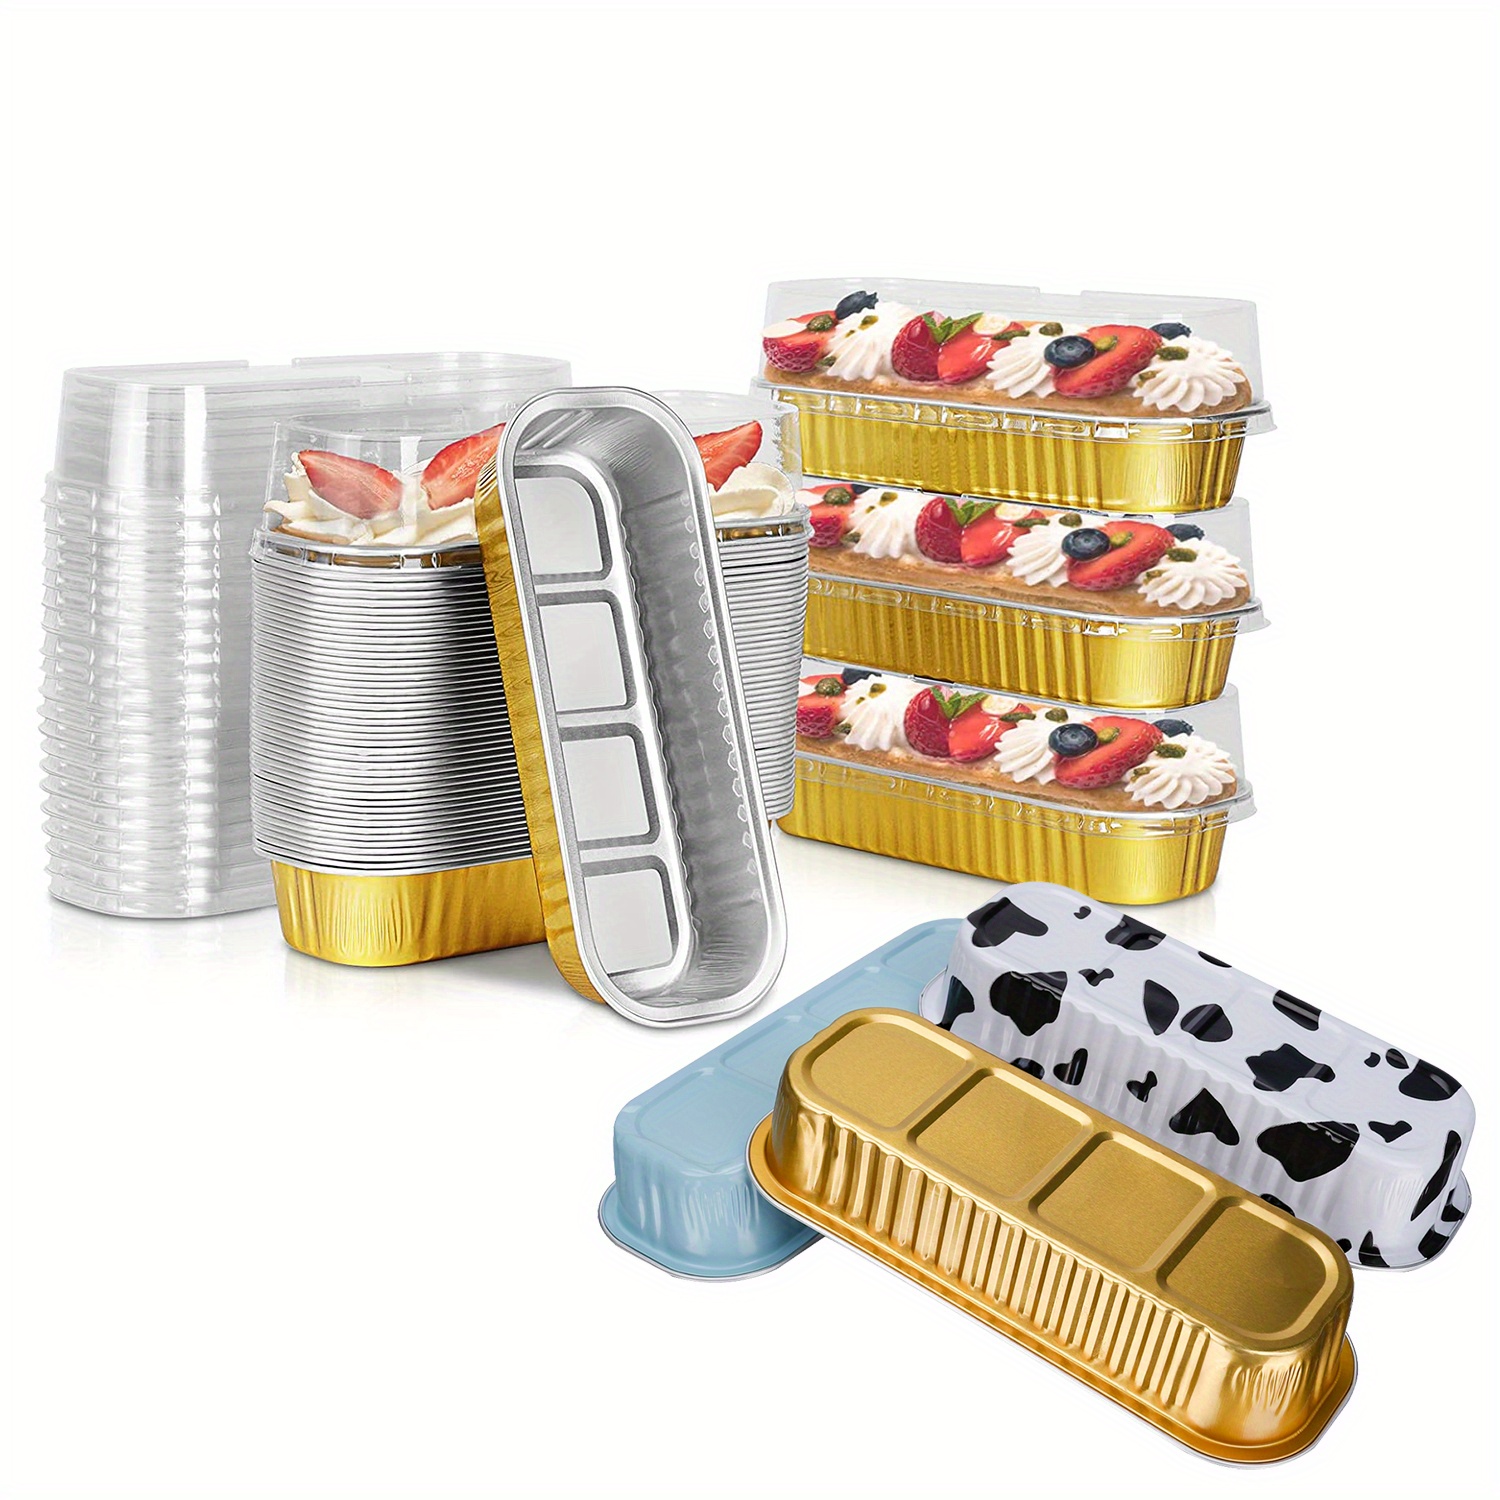 DCS Deals 13 x 9 x 2 -Inch Oblong Foil Pans (Pack of 12) - Disposable  Aluminum Foil Cake Pan - Freezer & Oven Safe - For Baking, Cooking, Storage  